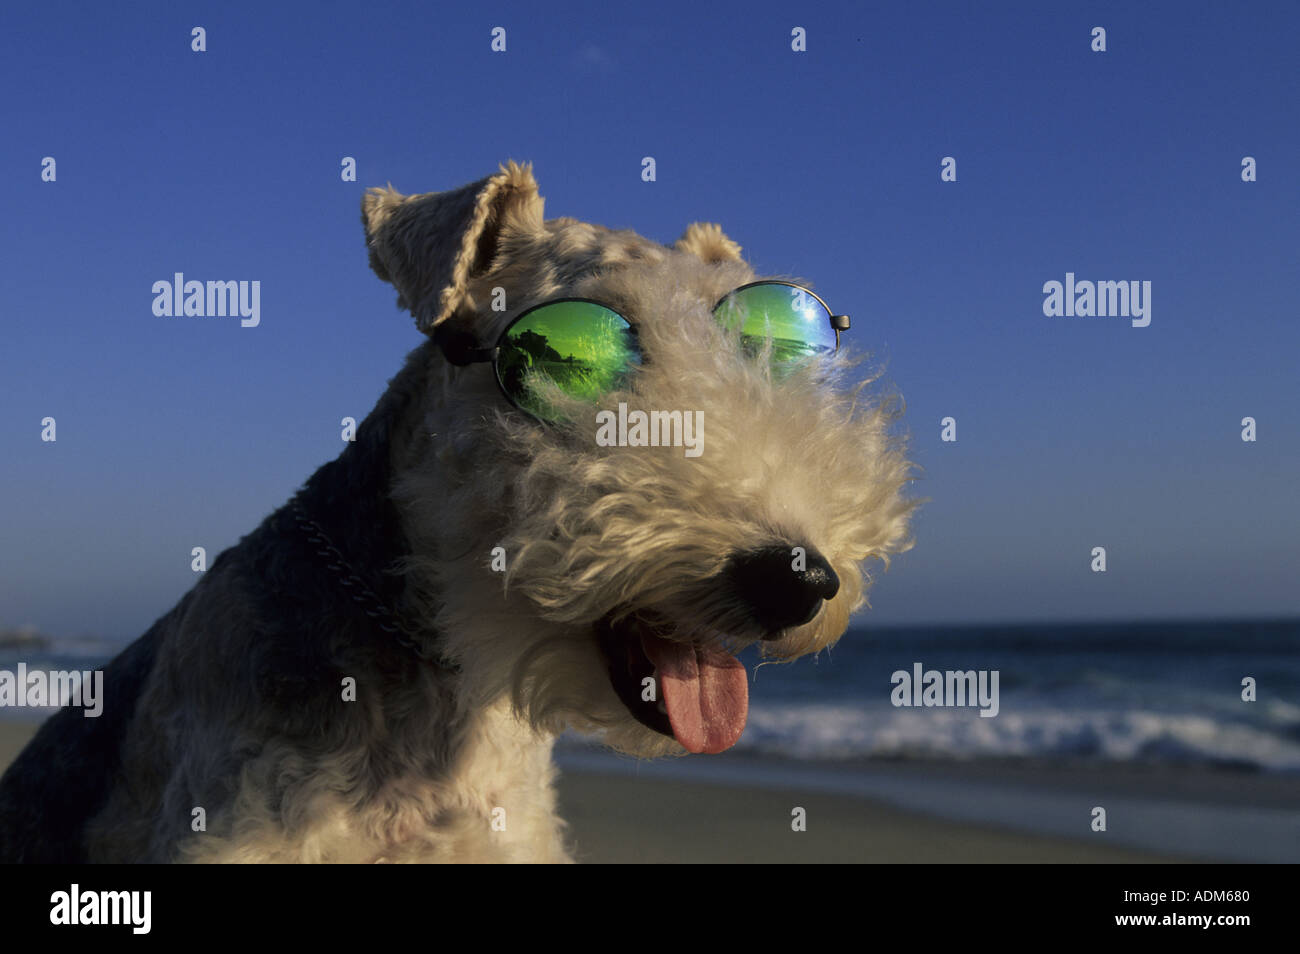 Dog wearing sunglasses at the beach Stock Photo